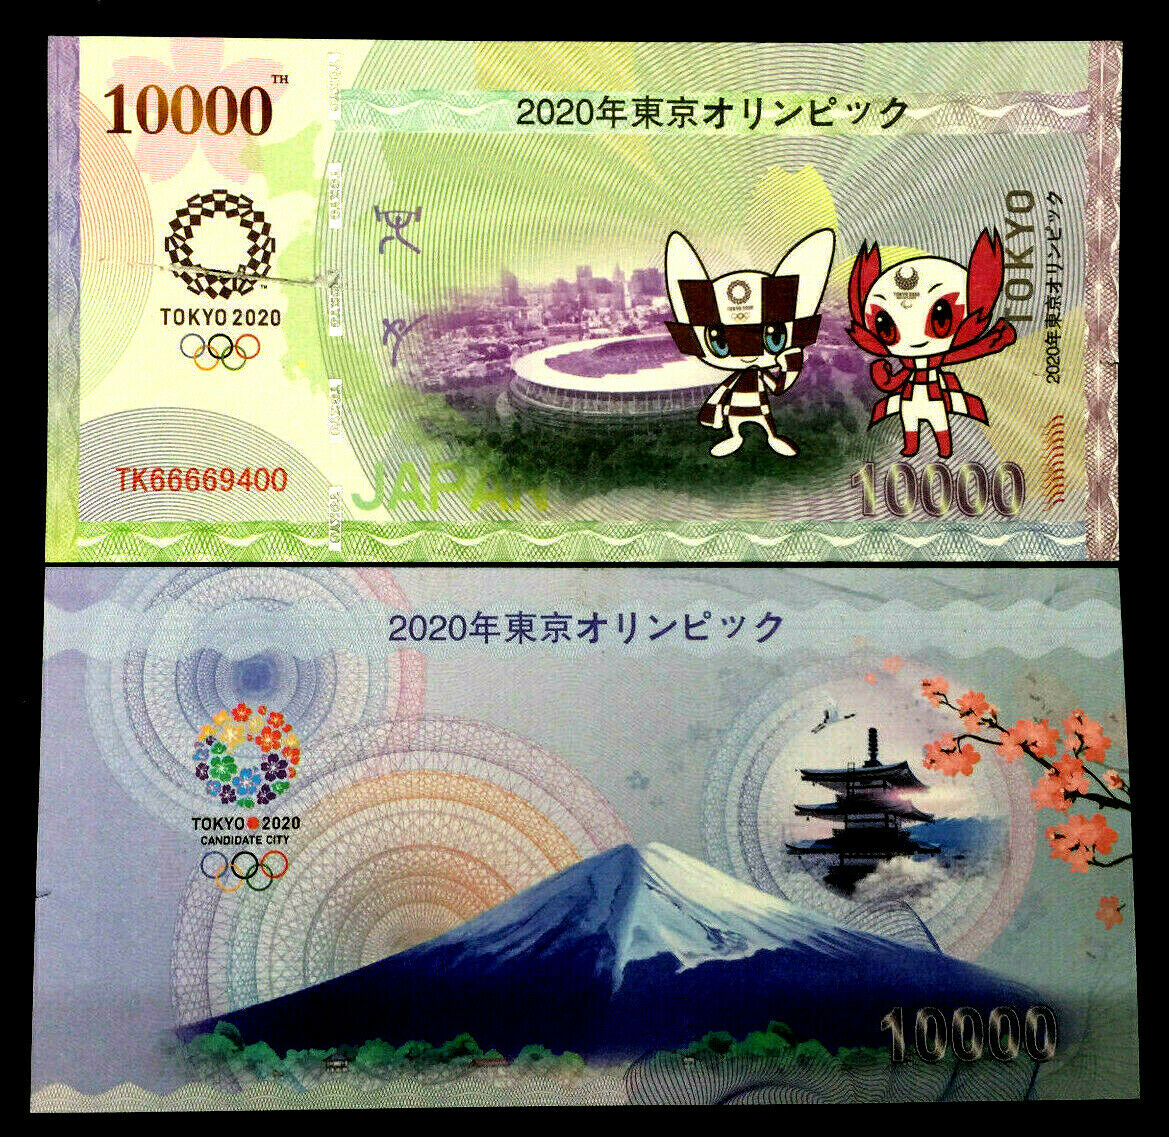 Japan Tokyo 2020 Olympic Games 10,000 Yen Cherry Blossom Mascot Banknotes